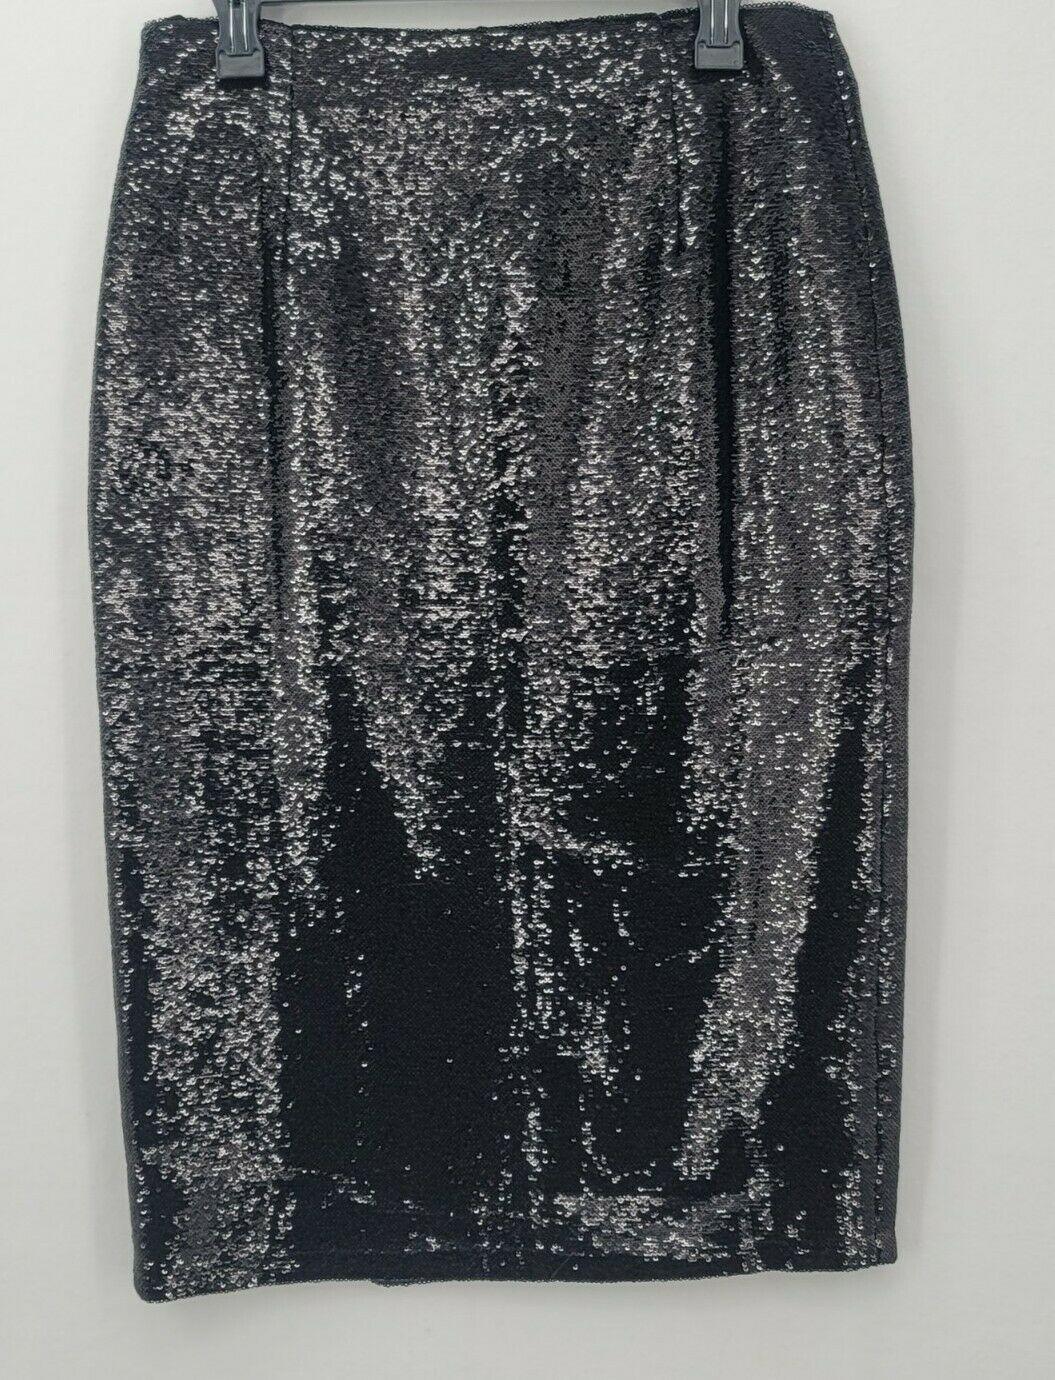 SEN MADISONS PENCIL SKIRT Sequin Pencil Skirt with Slits  Large - SVNYFancy